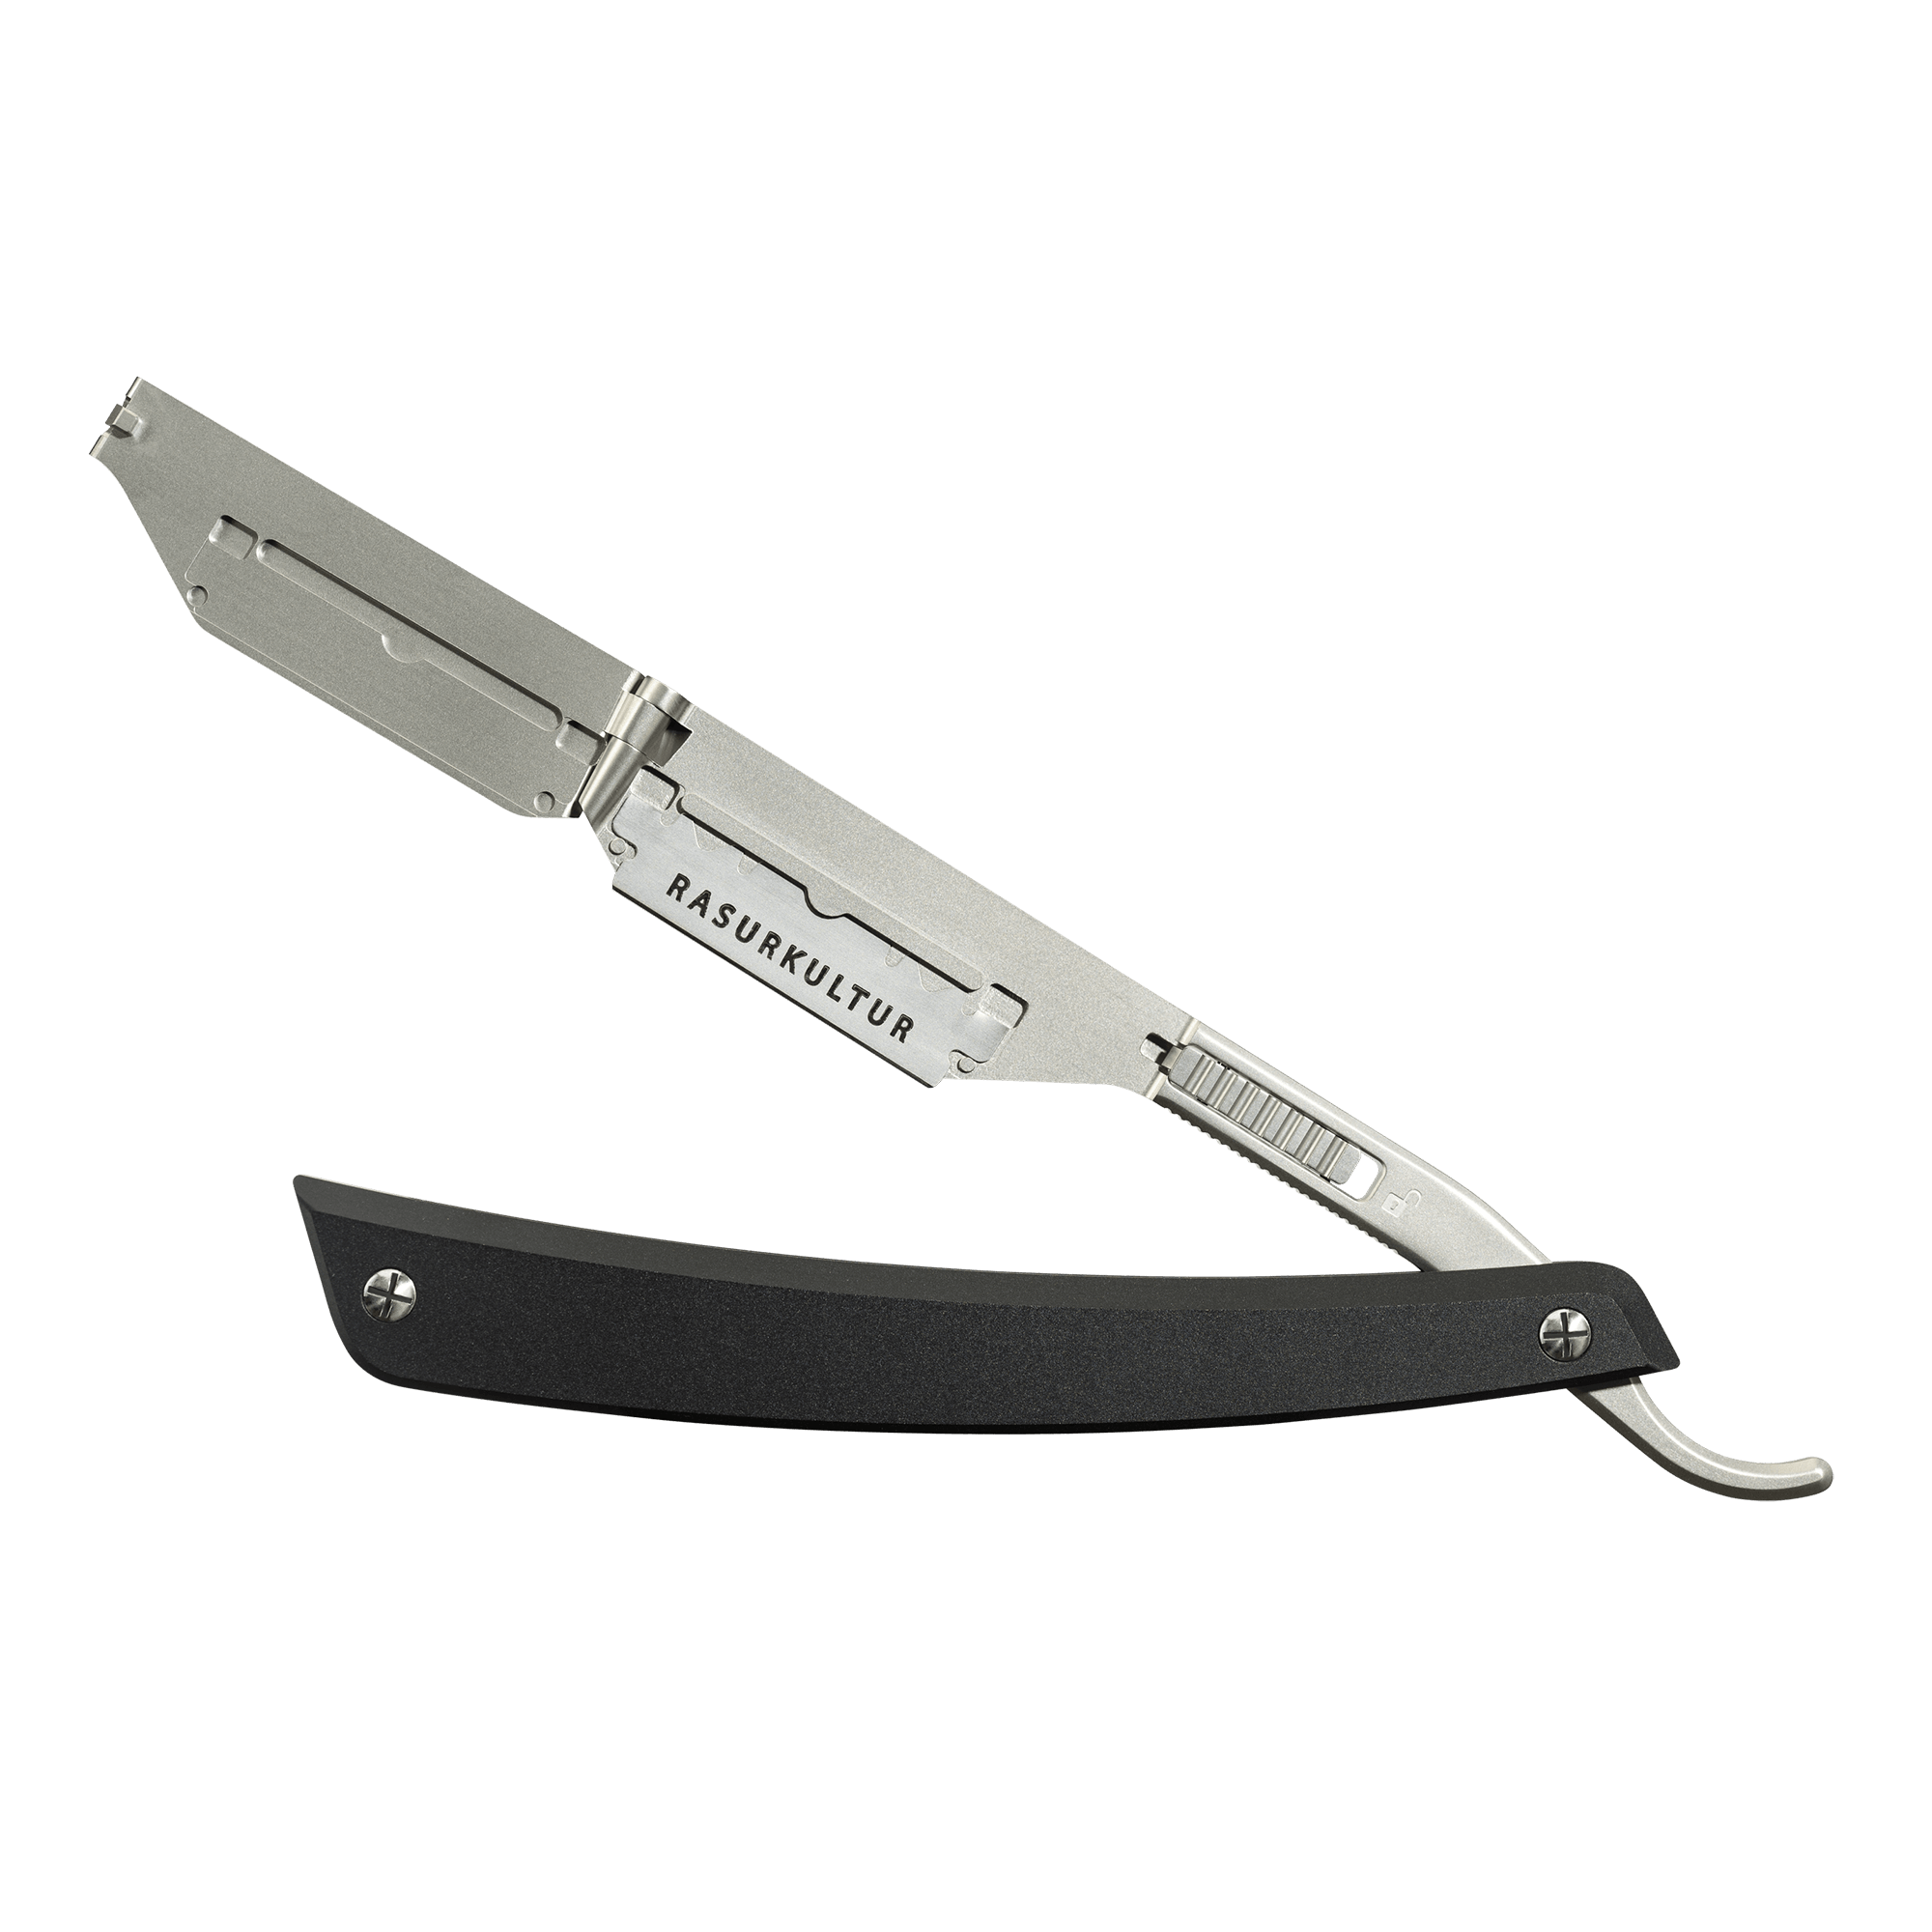 ENTHUSIAST PRO - Straight Razor with interchangeable blade